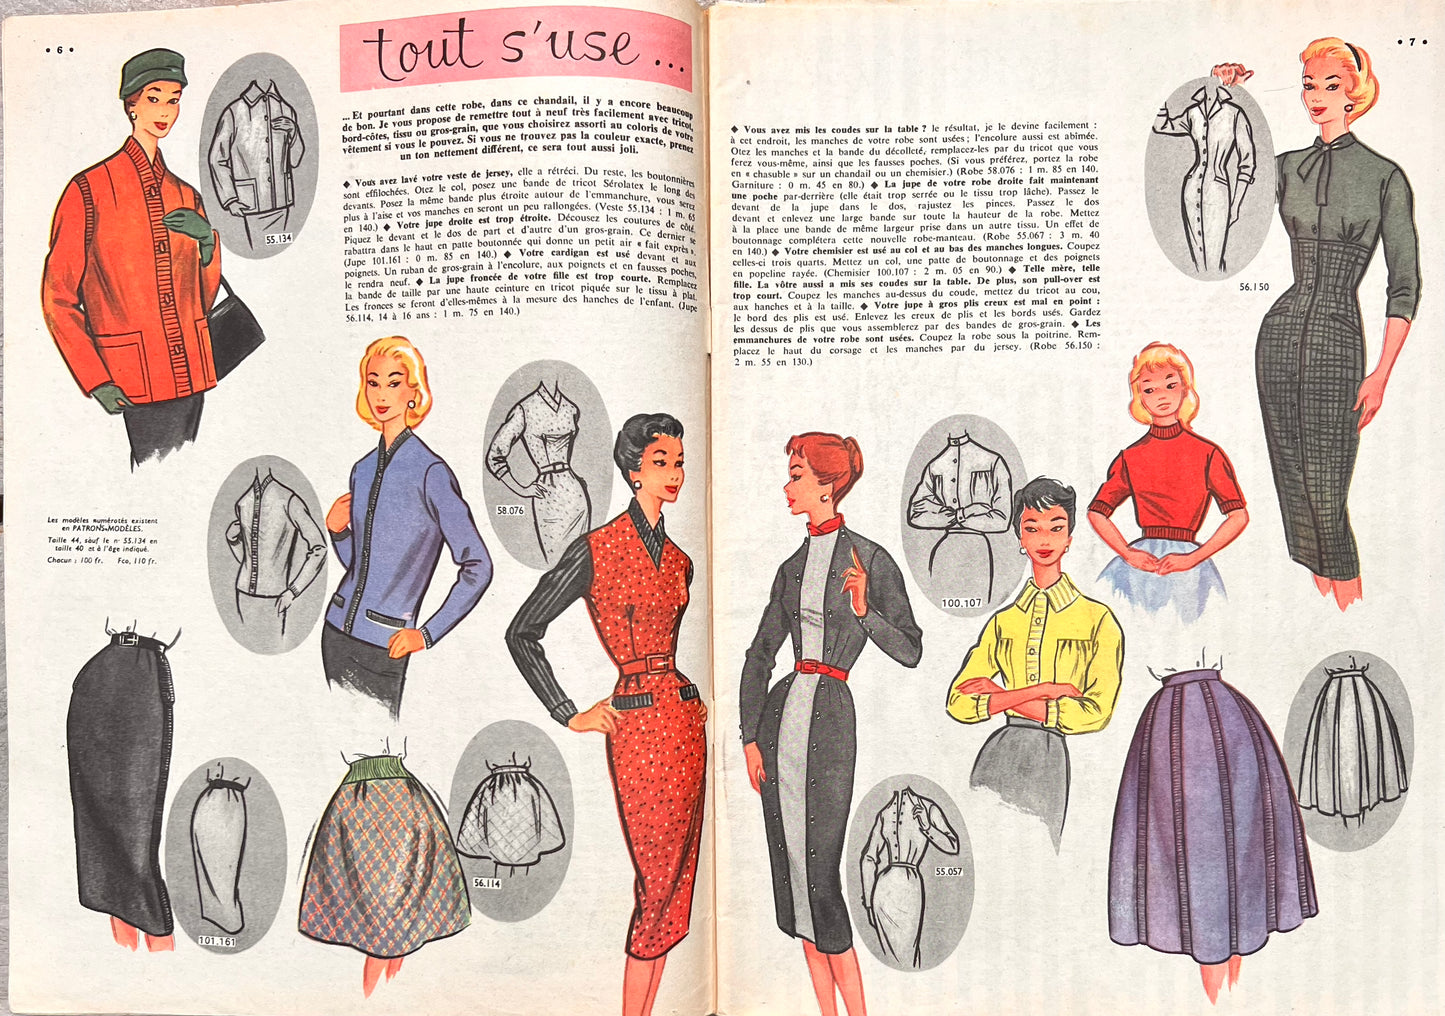 January 1957 Fashions in French Women's Magazine Le Petit Echo de la Mode